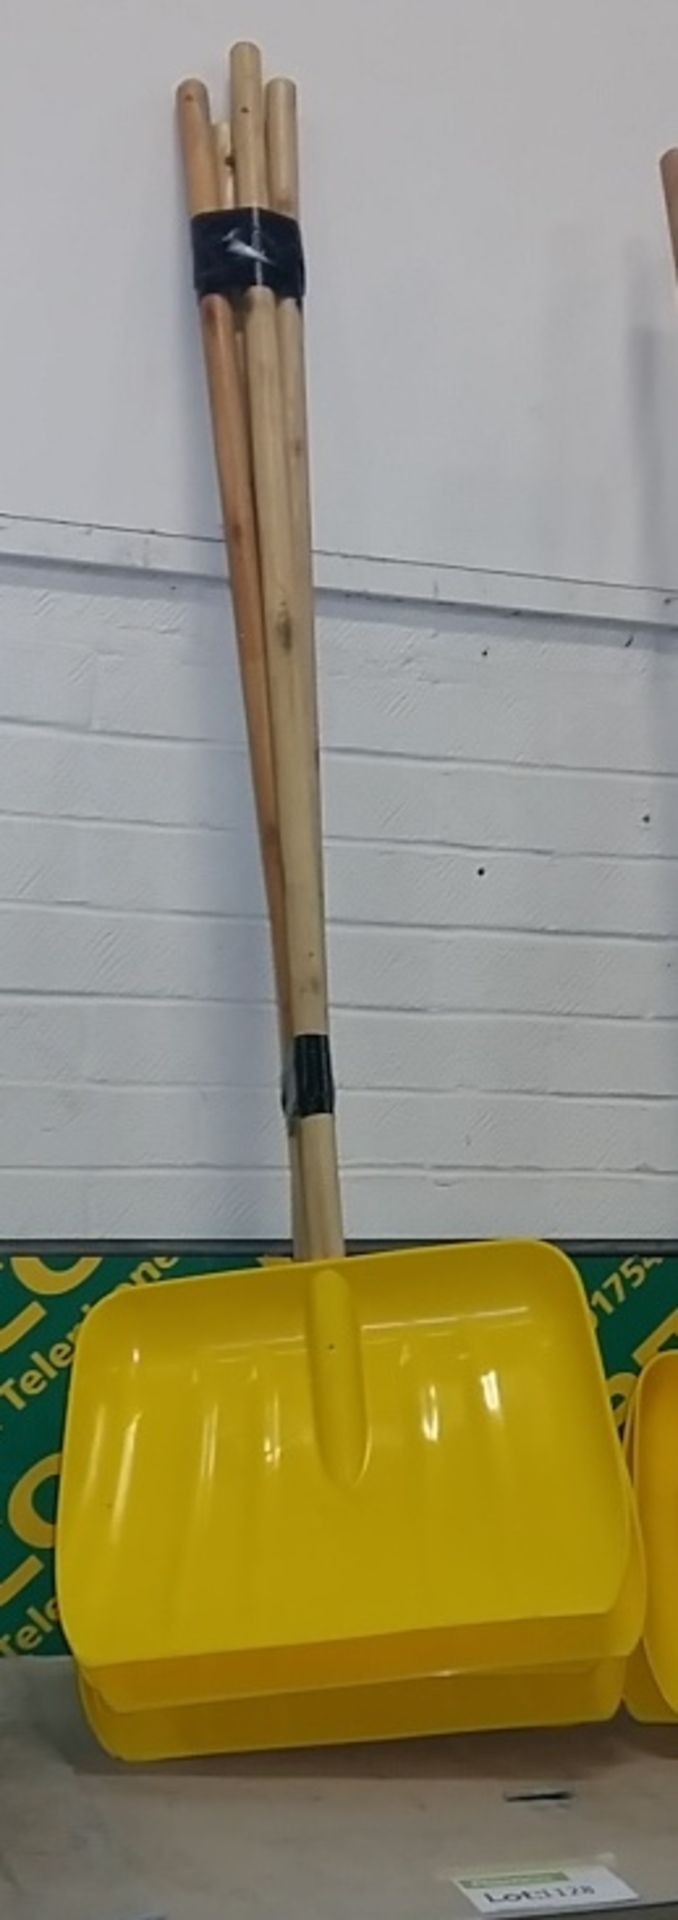 5x Yellow snow shovels